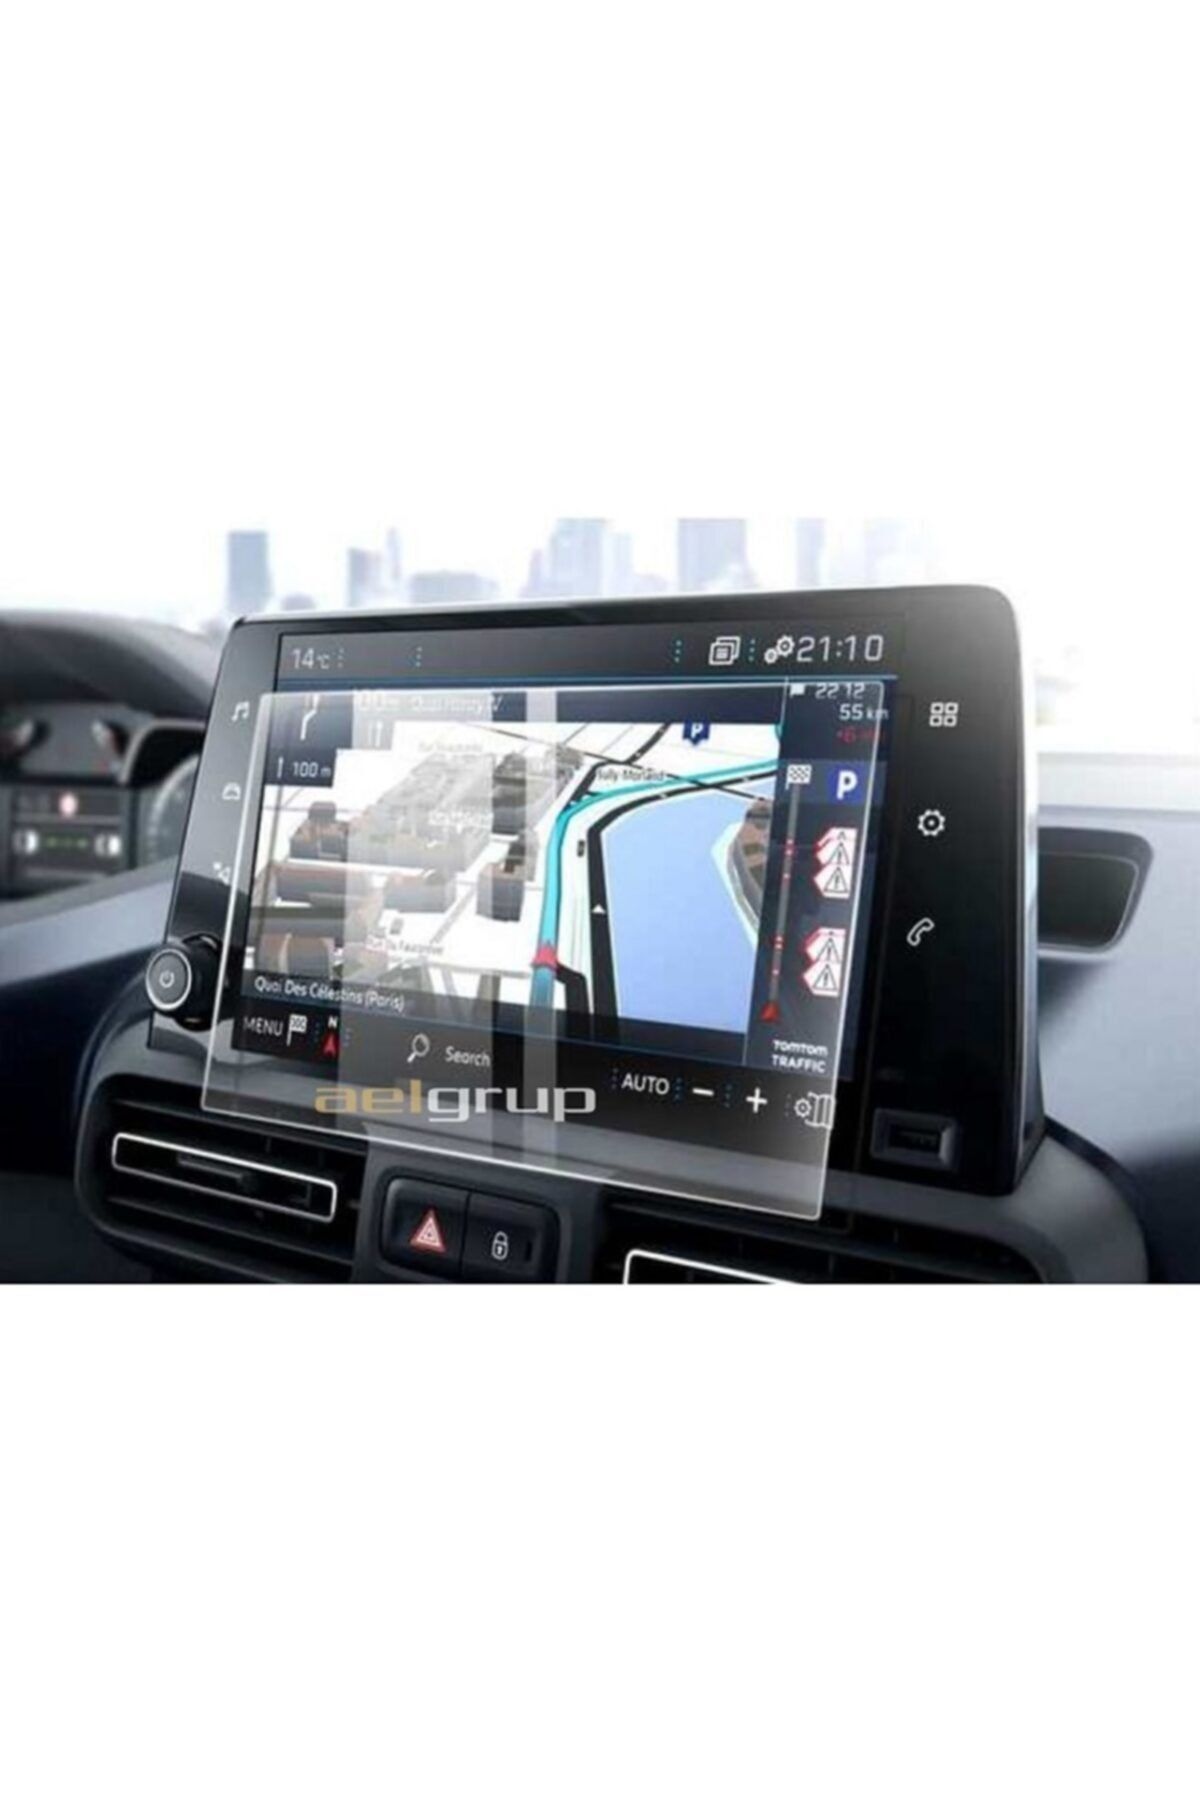 OLED GARAJ Peugeot Rifter İçin Uyumlu Navigasyon Ekran Koruyucu 9h Nano Glass